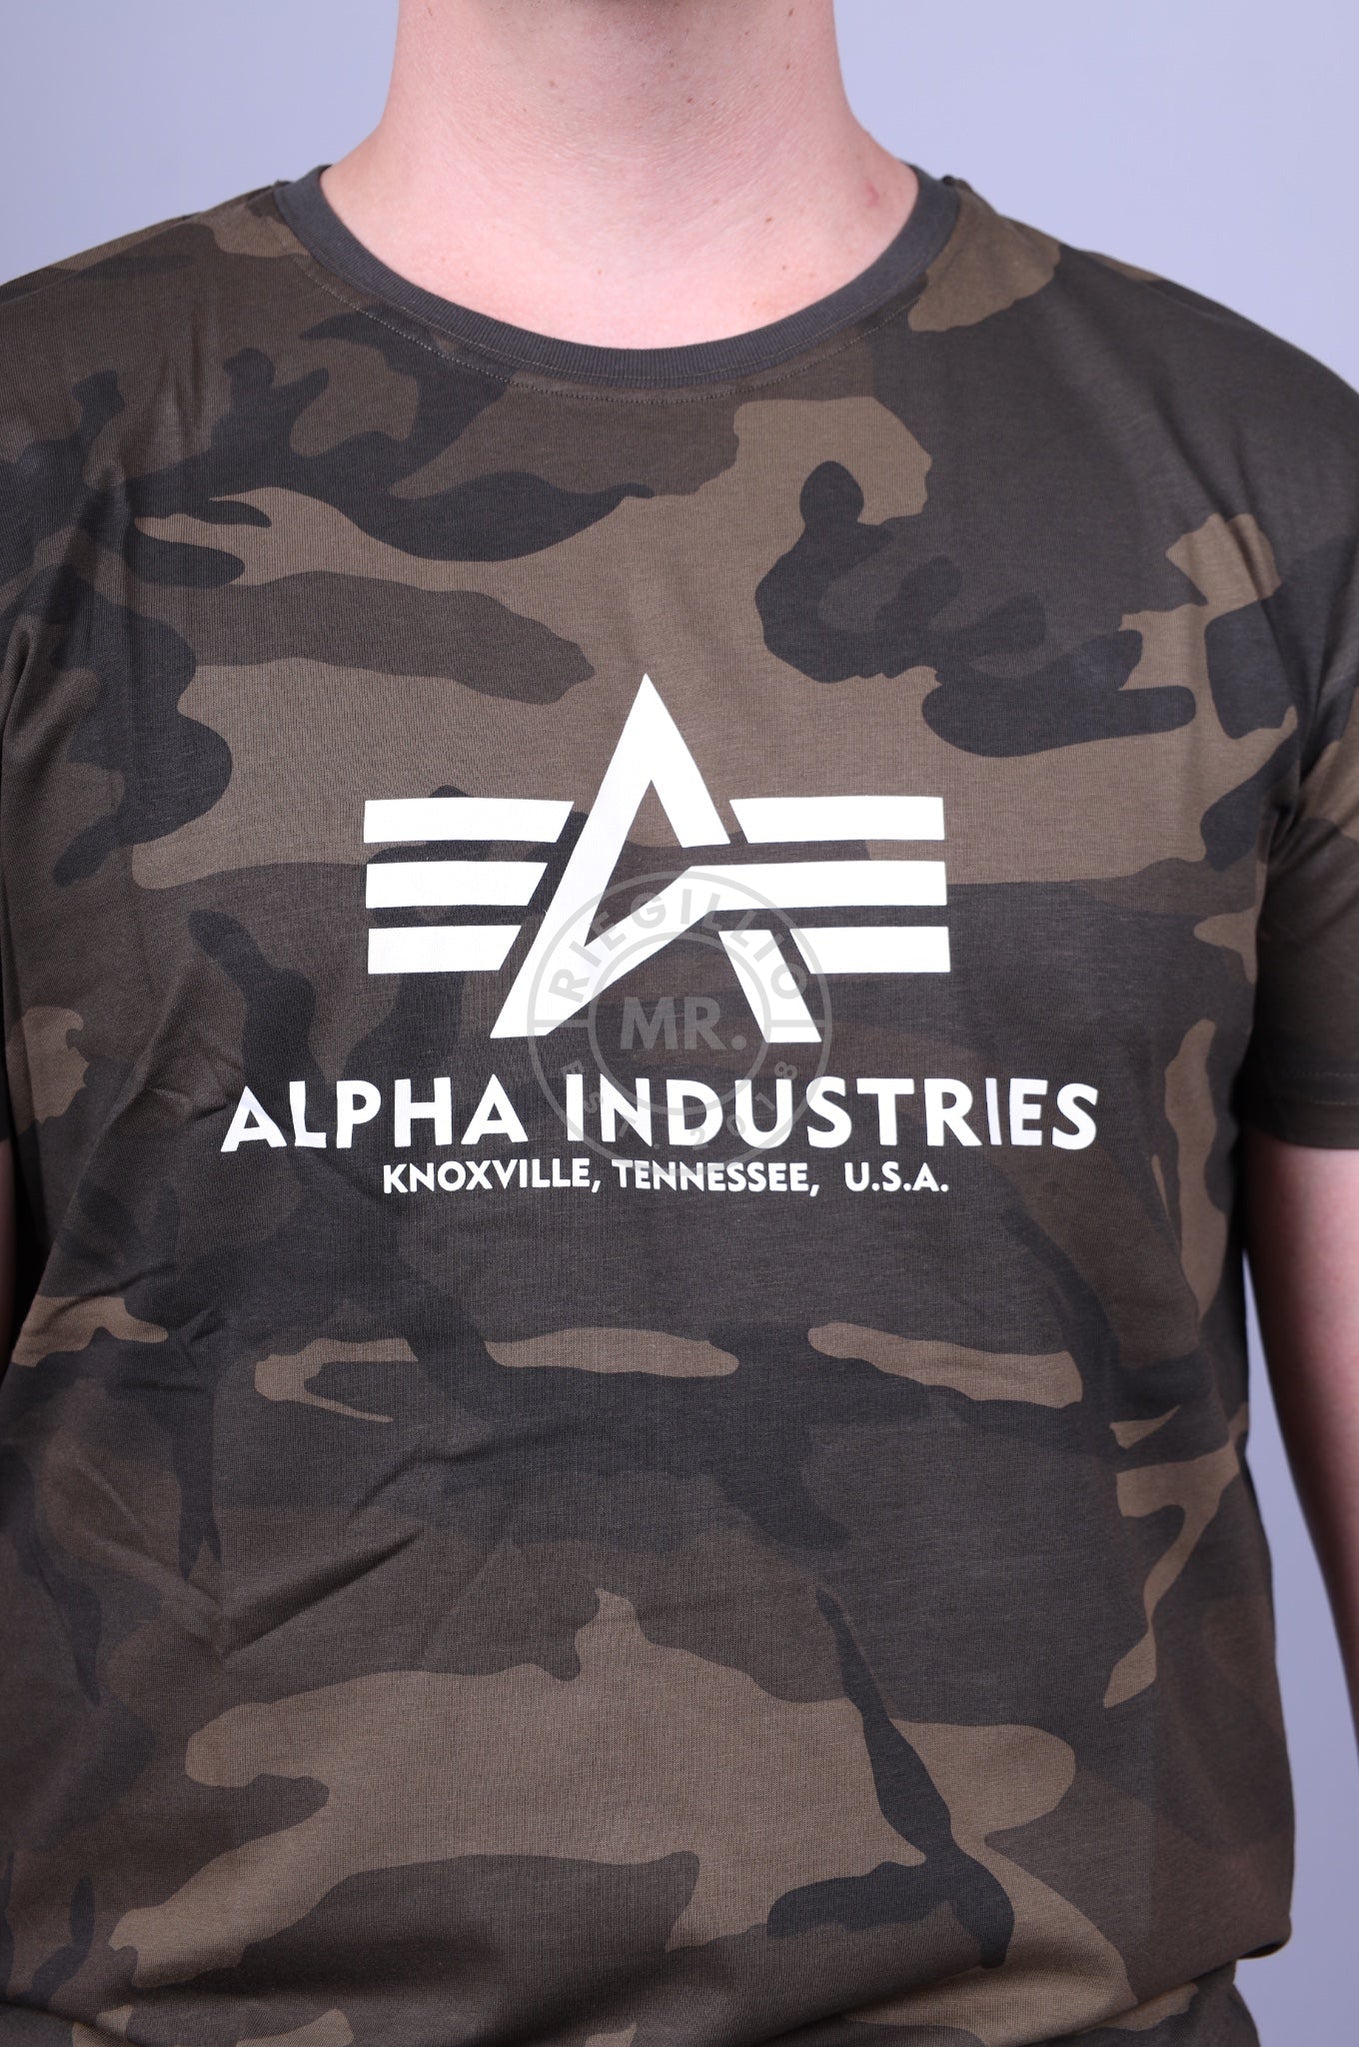 MR. Basic Alpha Industries Black Riegillio Camo at T-Shirt